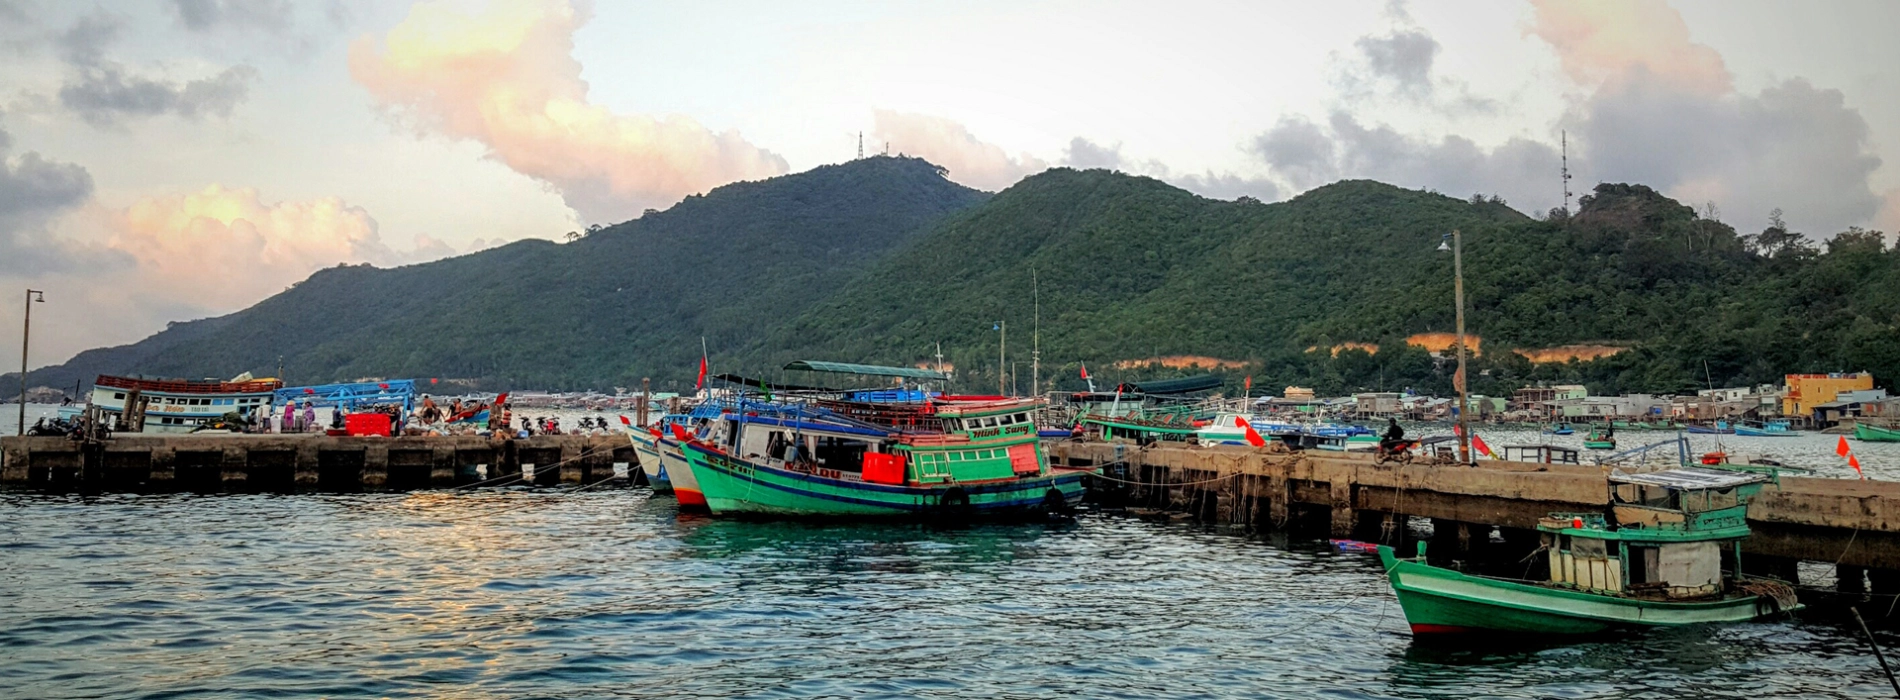 Nam Du archipelago